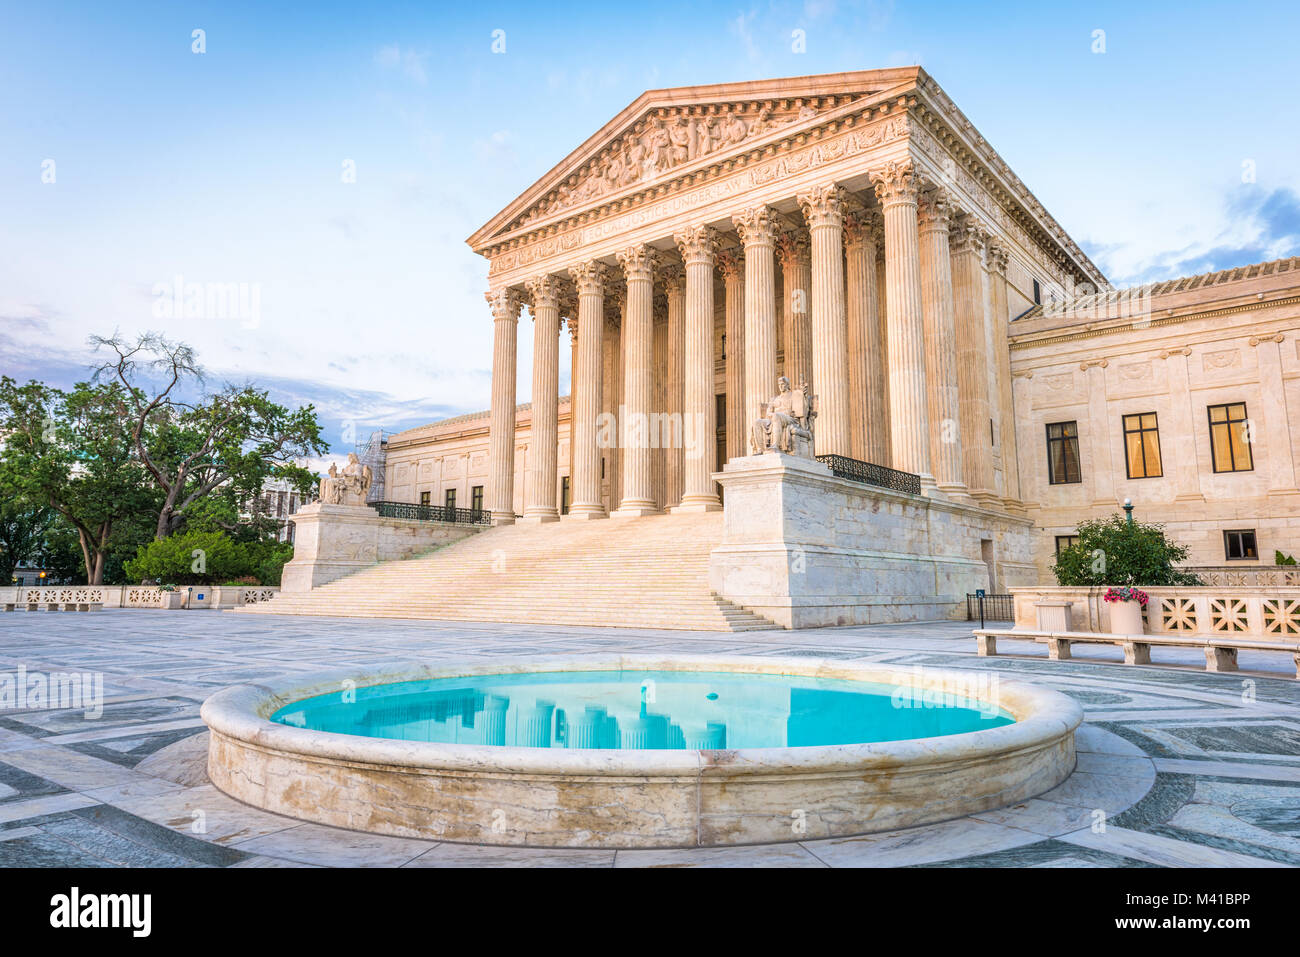 United States Supreme Court Building in Washington DC, USA. Stock Photo